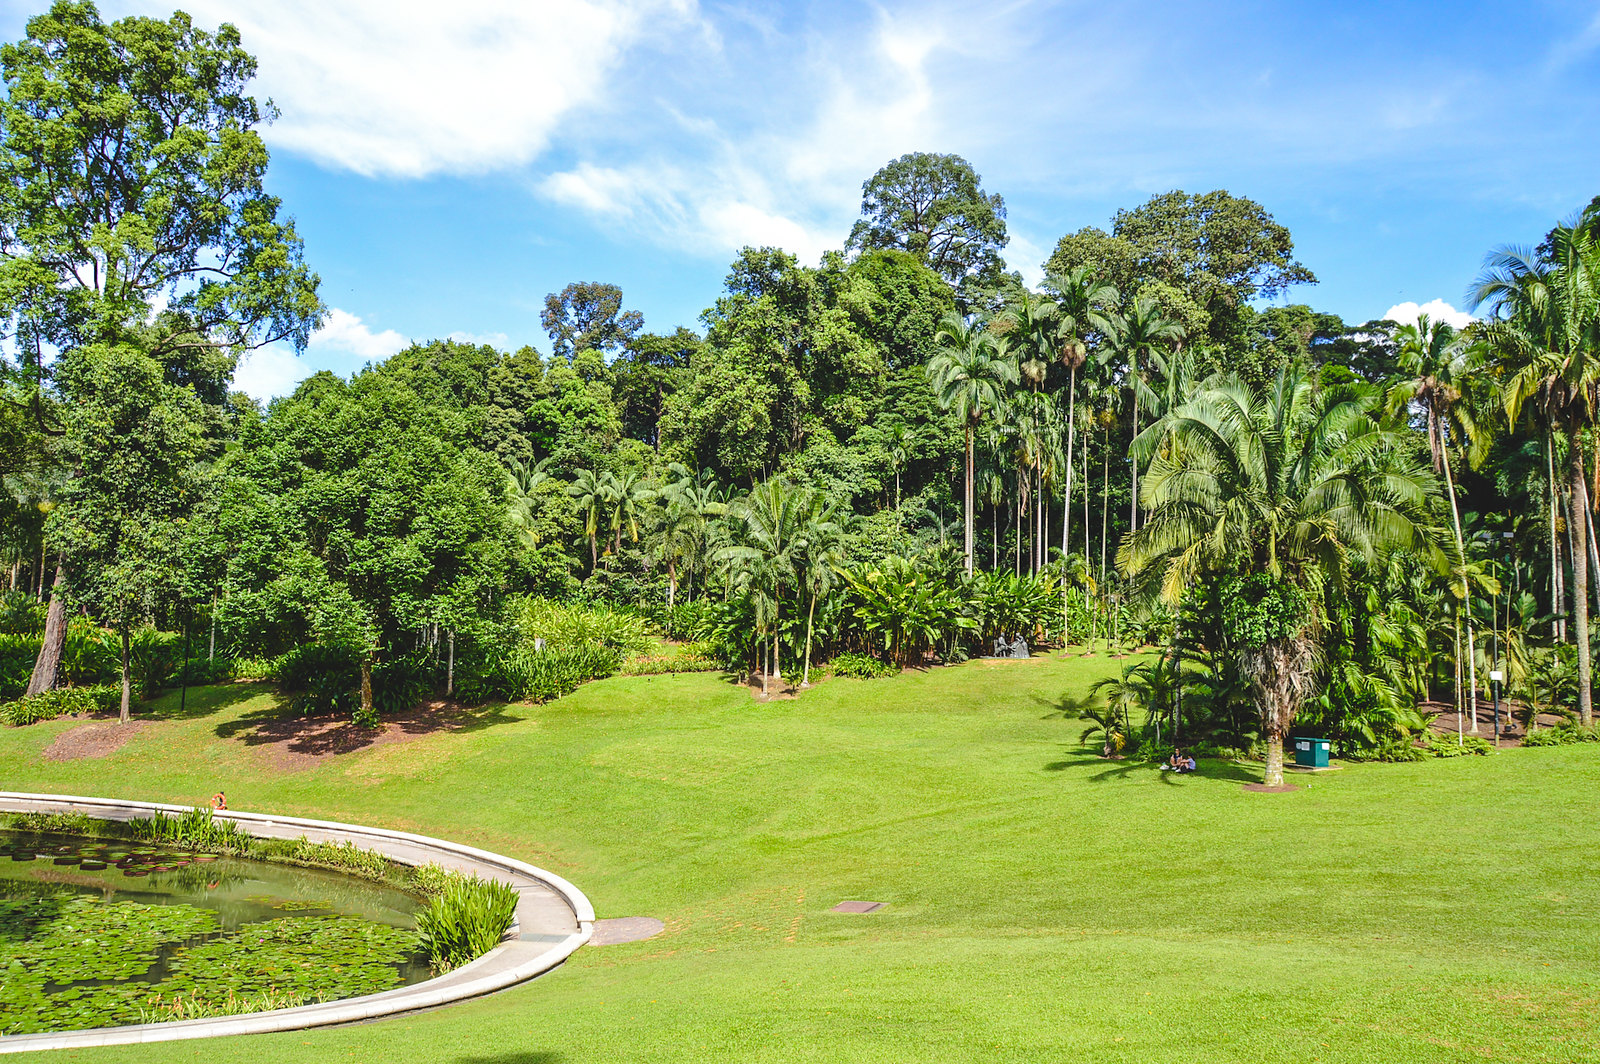 Singapore Botanic Gardens 2016